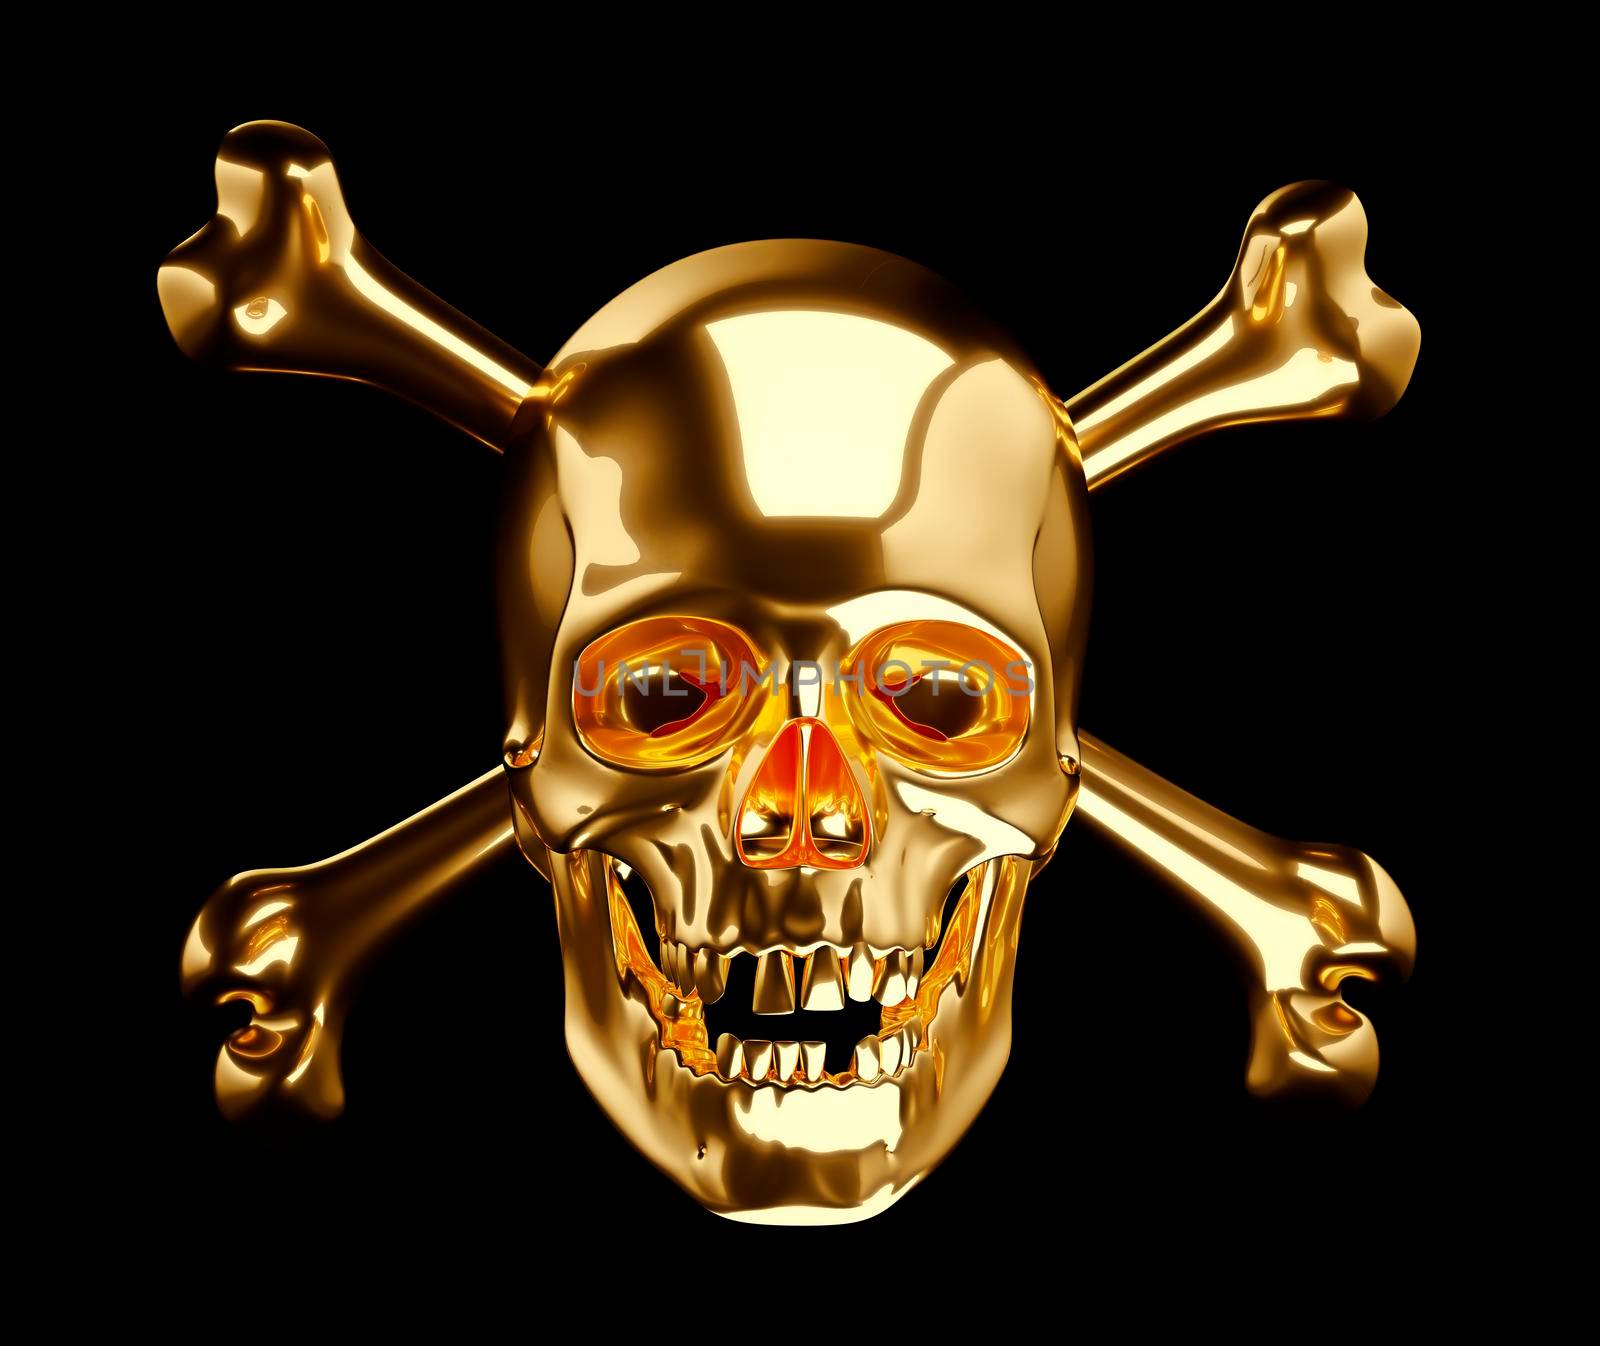 Golden Skull with crossbones or totenkopf isolated on black 3d render 3d illustration